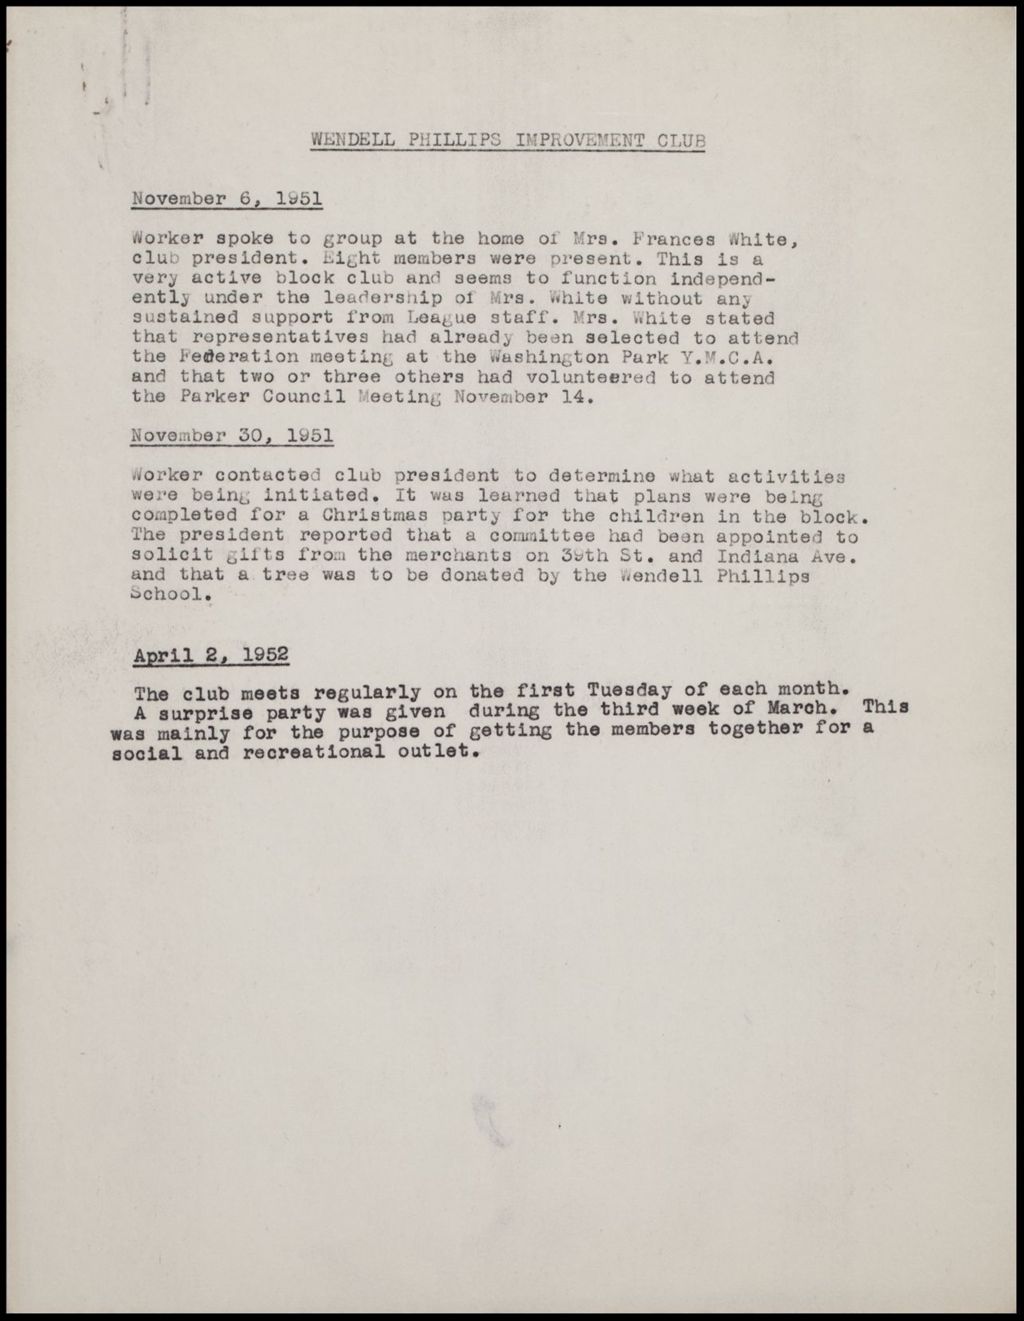 Miniature of Block Club Reports - Snowdenville Council, 1950-1954 (Folder II-2303)